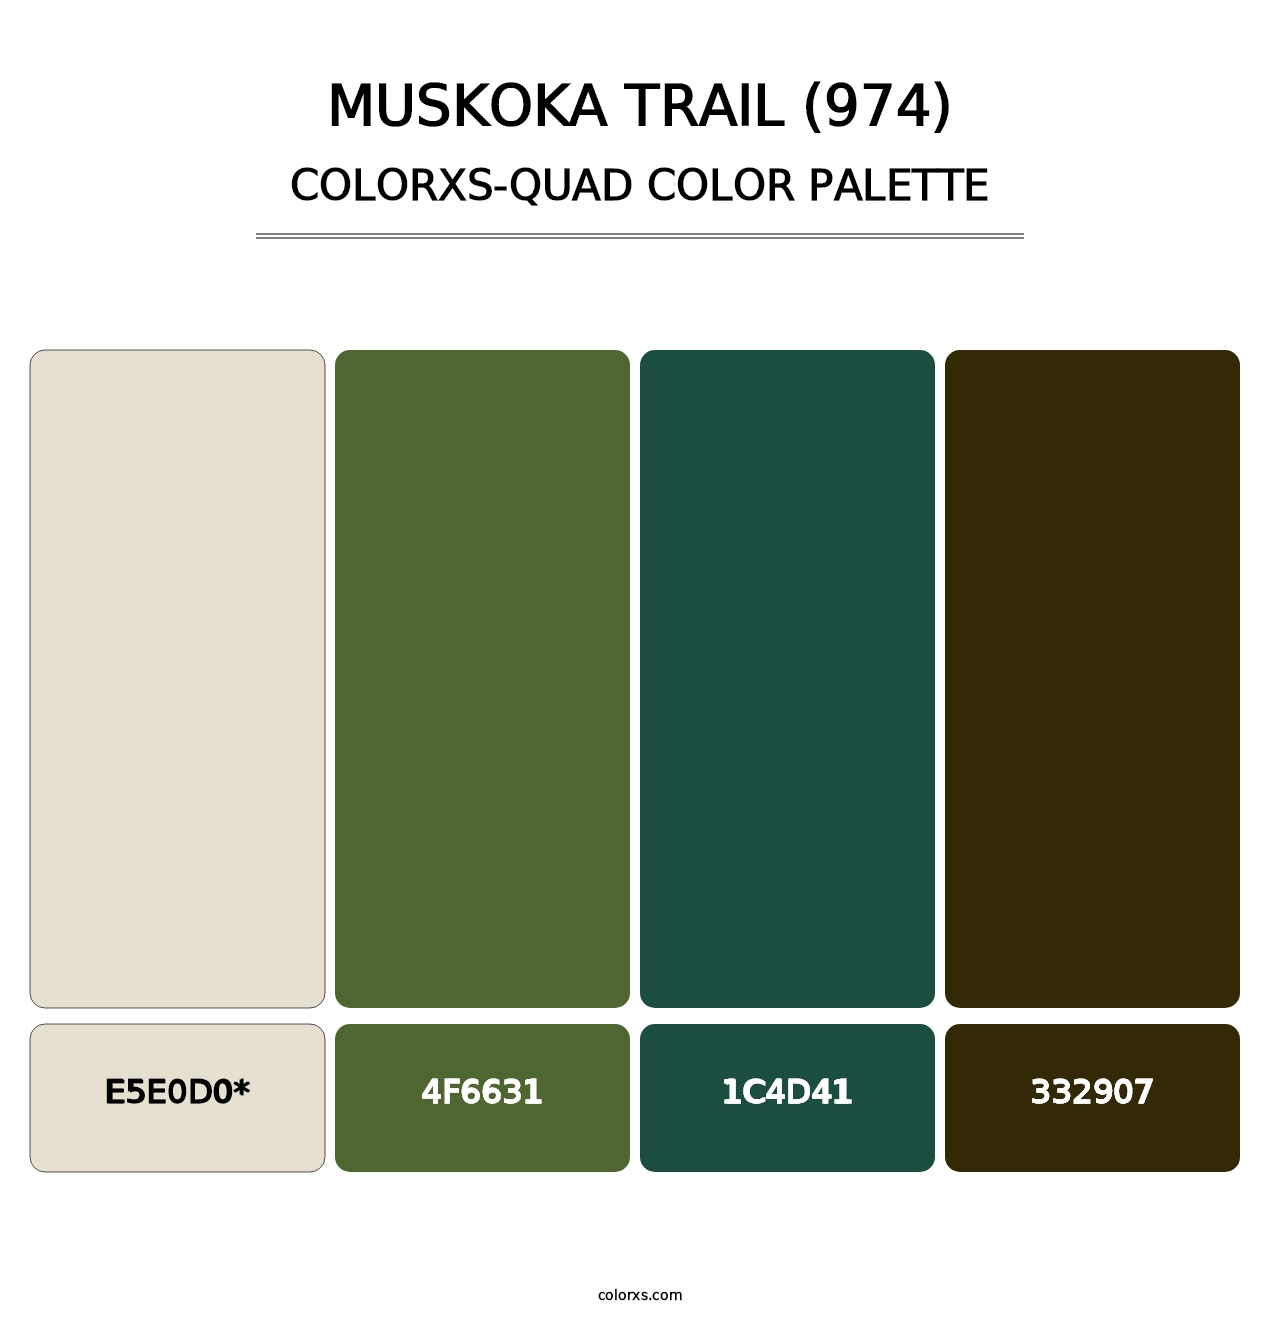 Muskoka Trail (974) - Colorxs Quad Palette